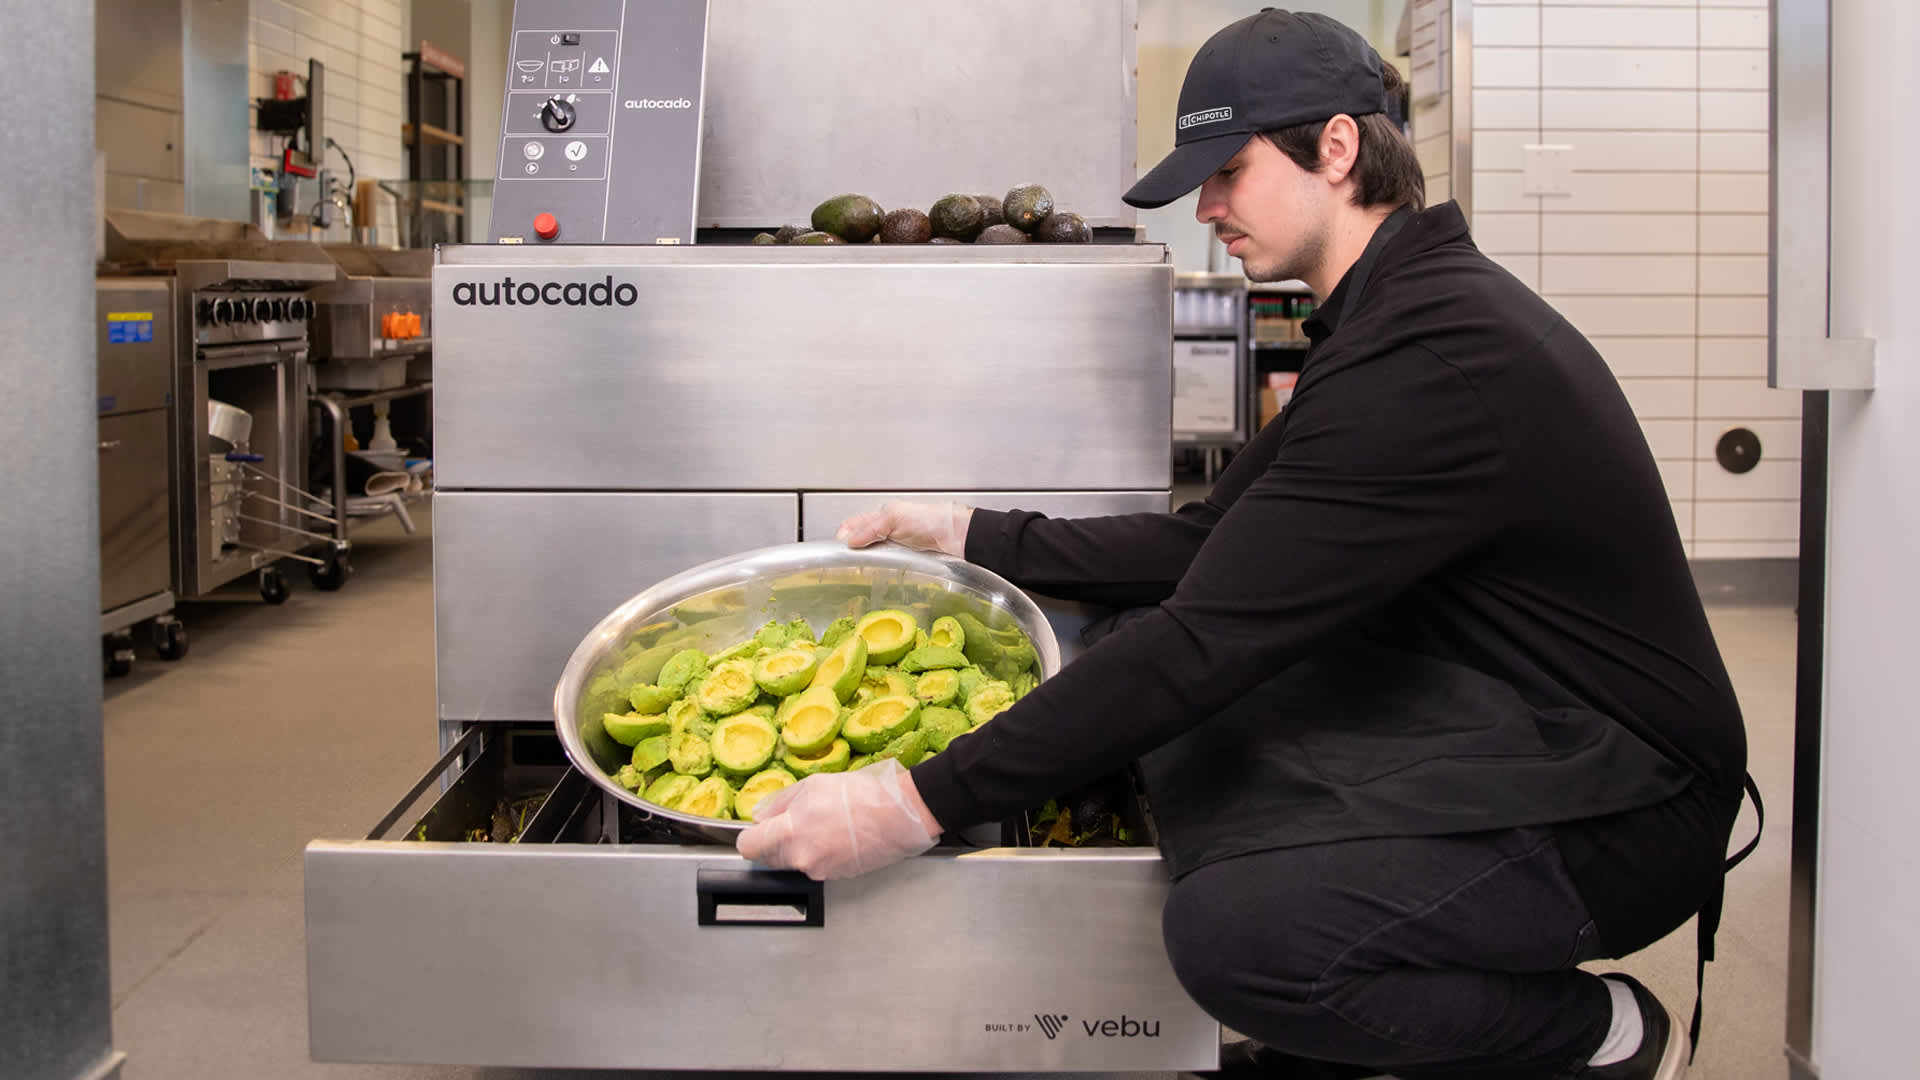 Chipotle tests robot to prepare avocados for guacamole